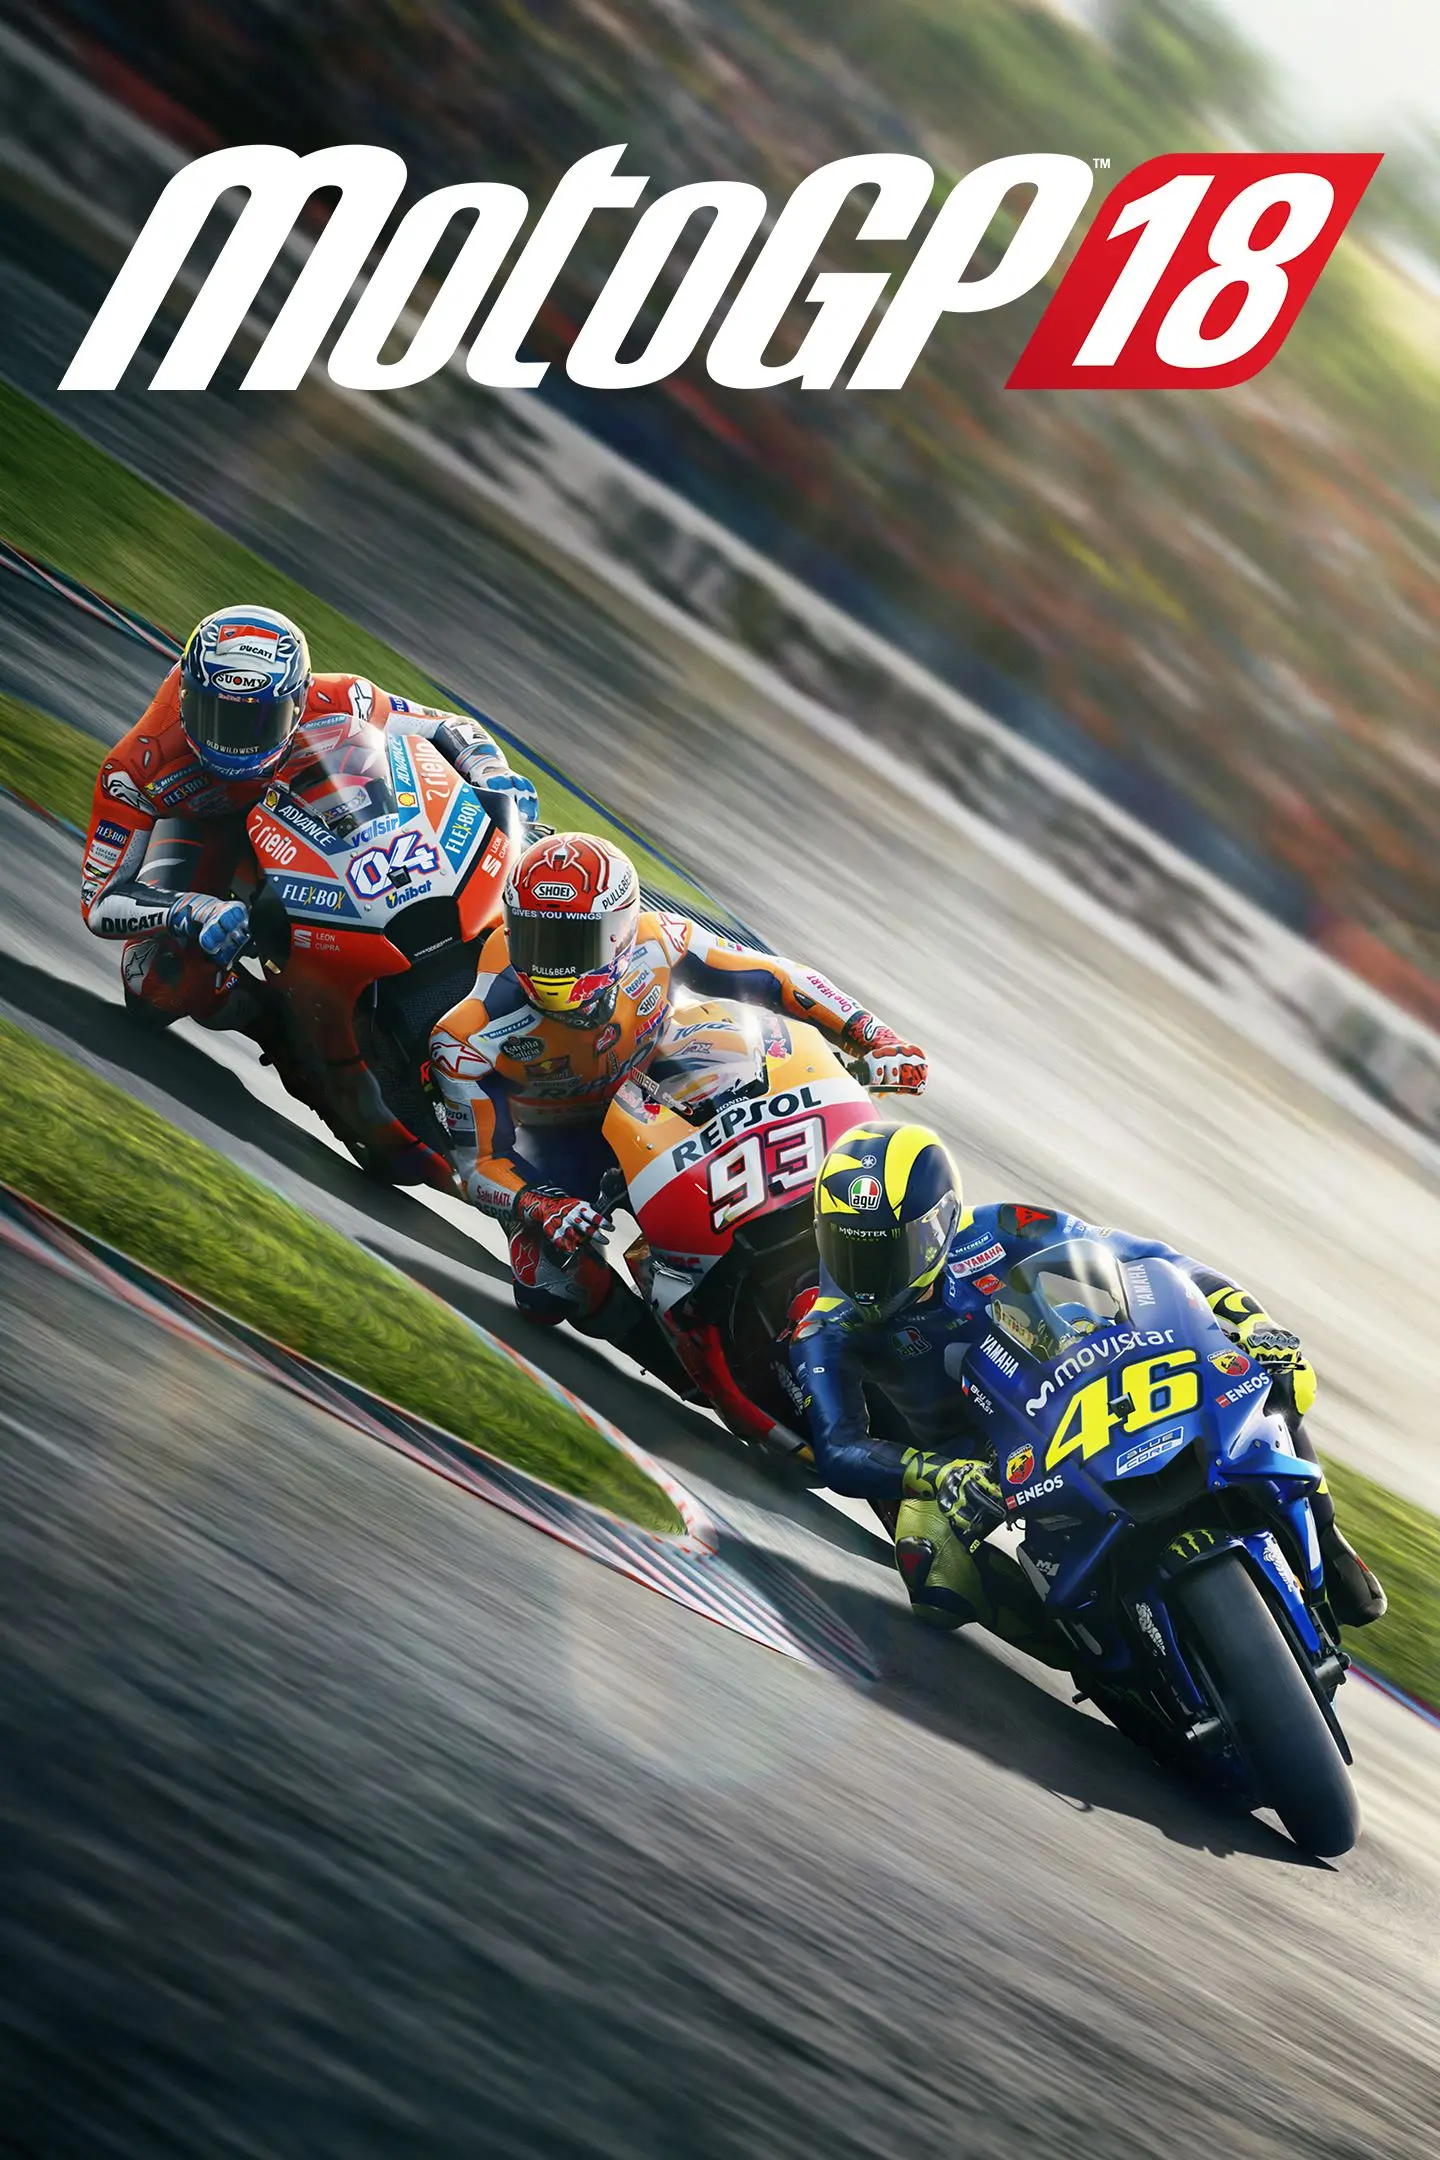 MotoGP 18 (PC) - Steam - Digital Code